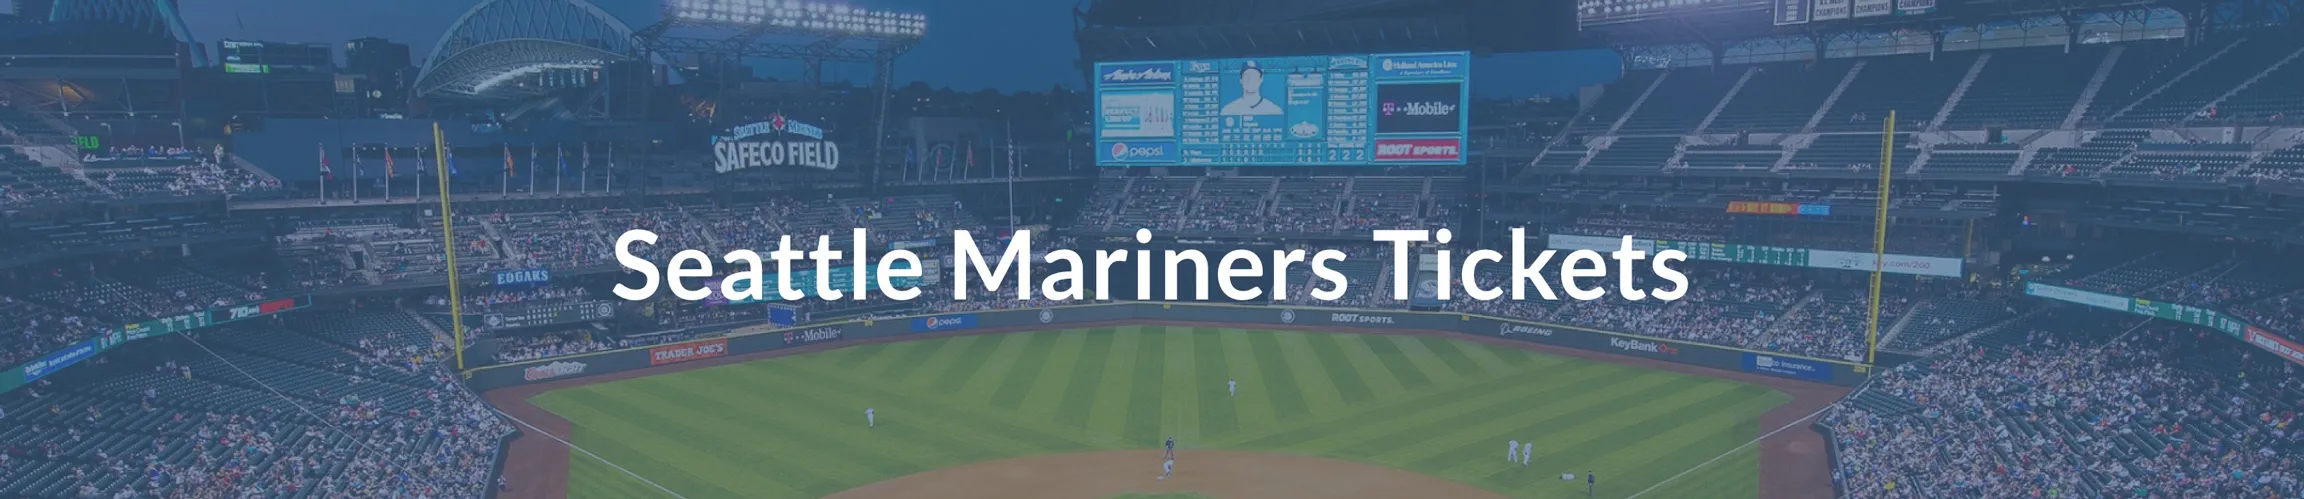 Seattle Mariners Baseball T-Mobile Ball Park